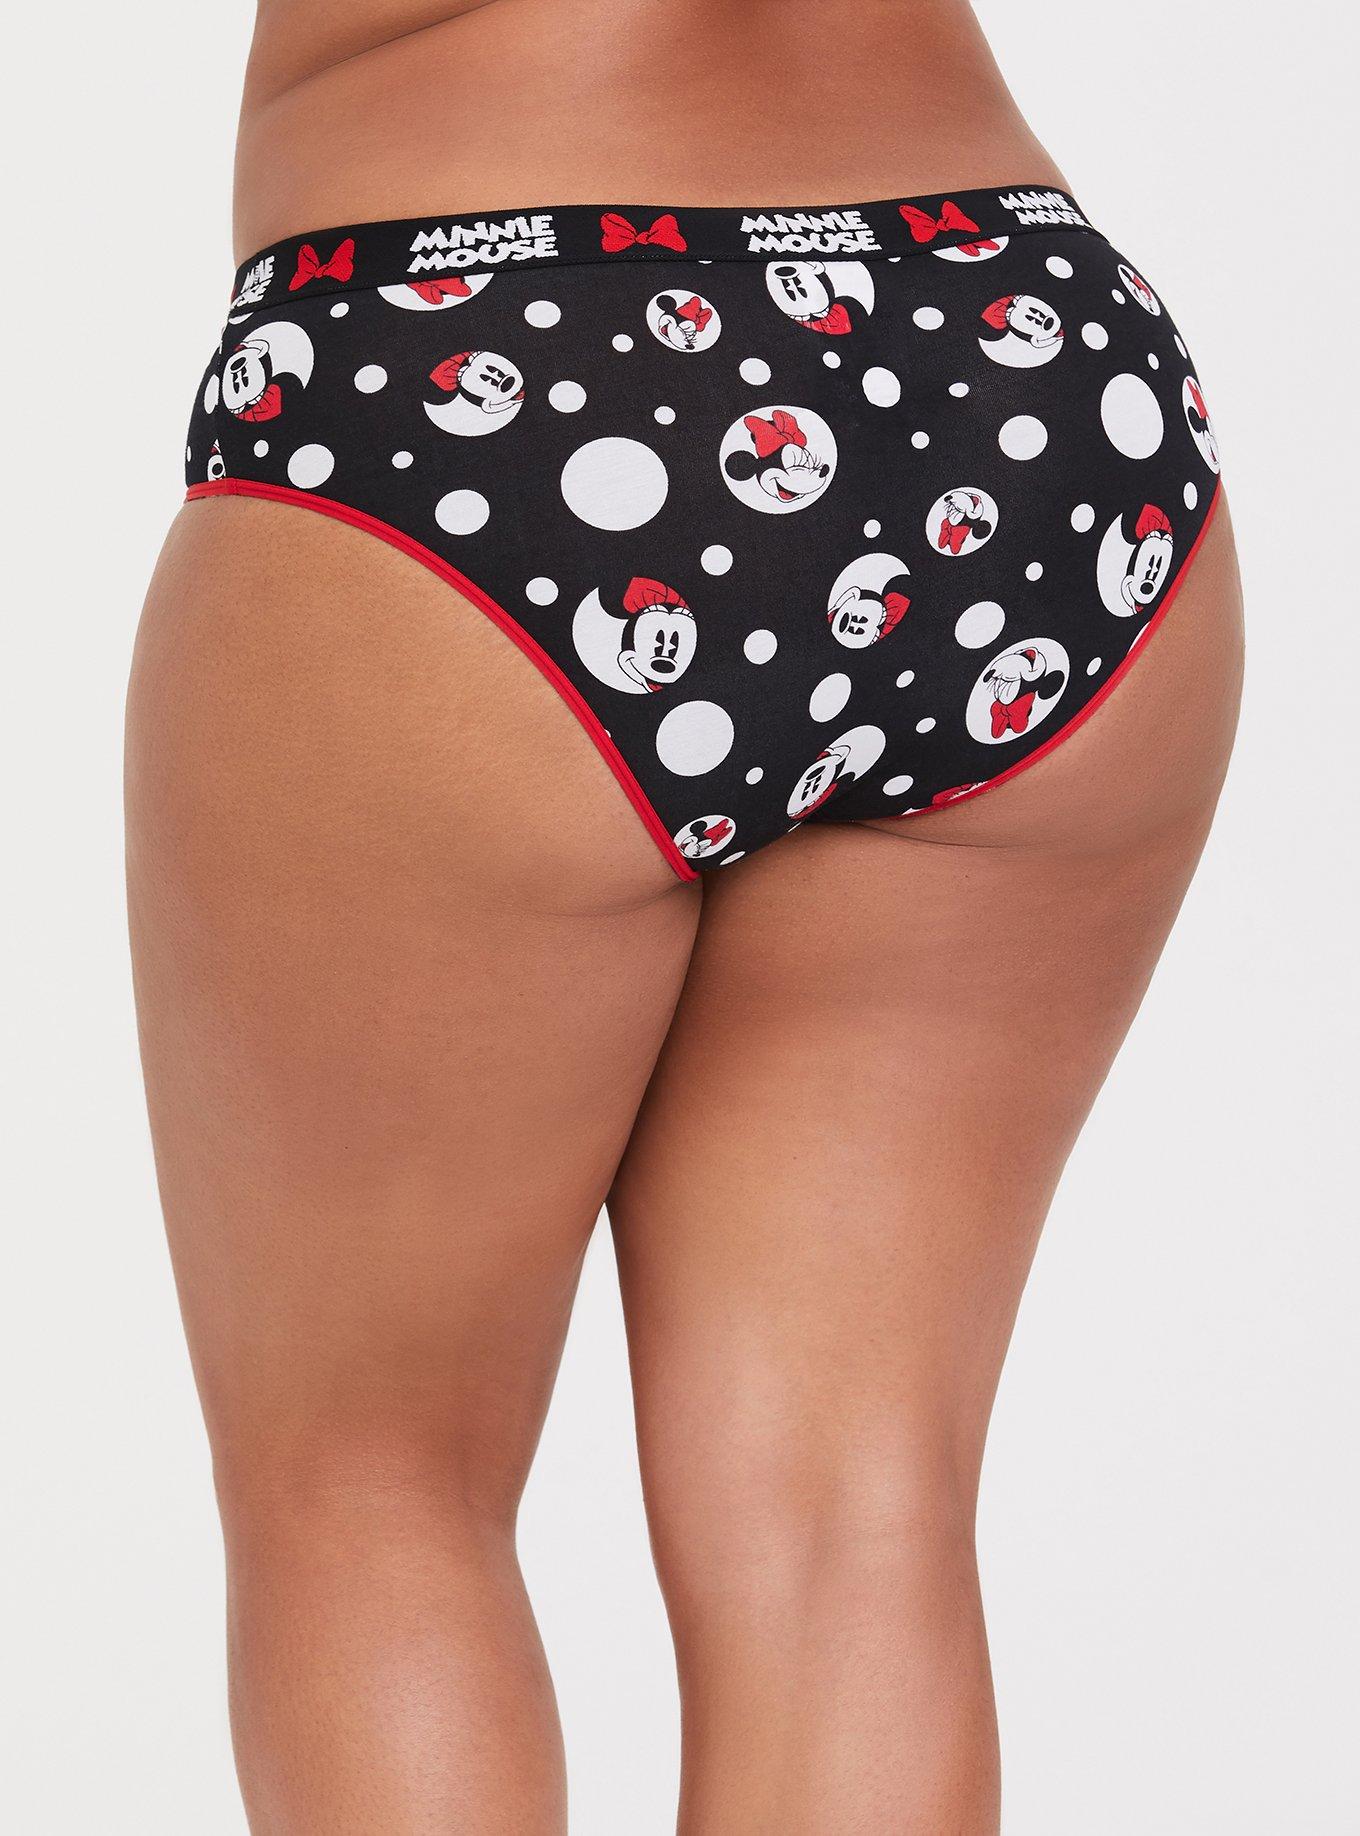 Plus Size - Disney Minnie Mouse Cotton Hipster Panty - Torrid